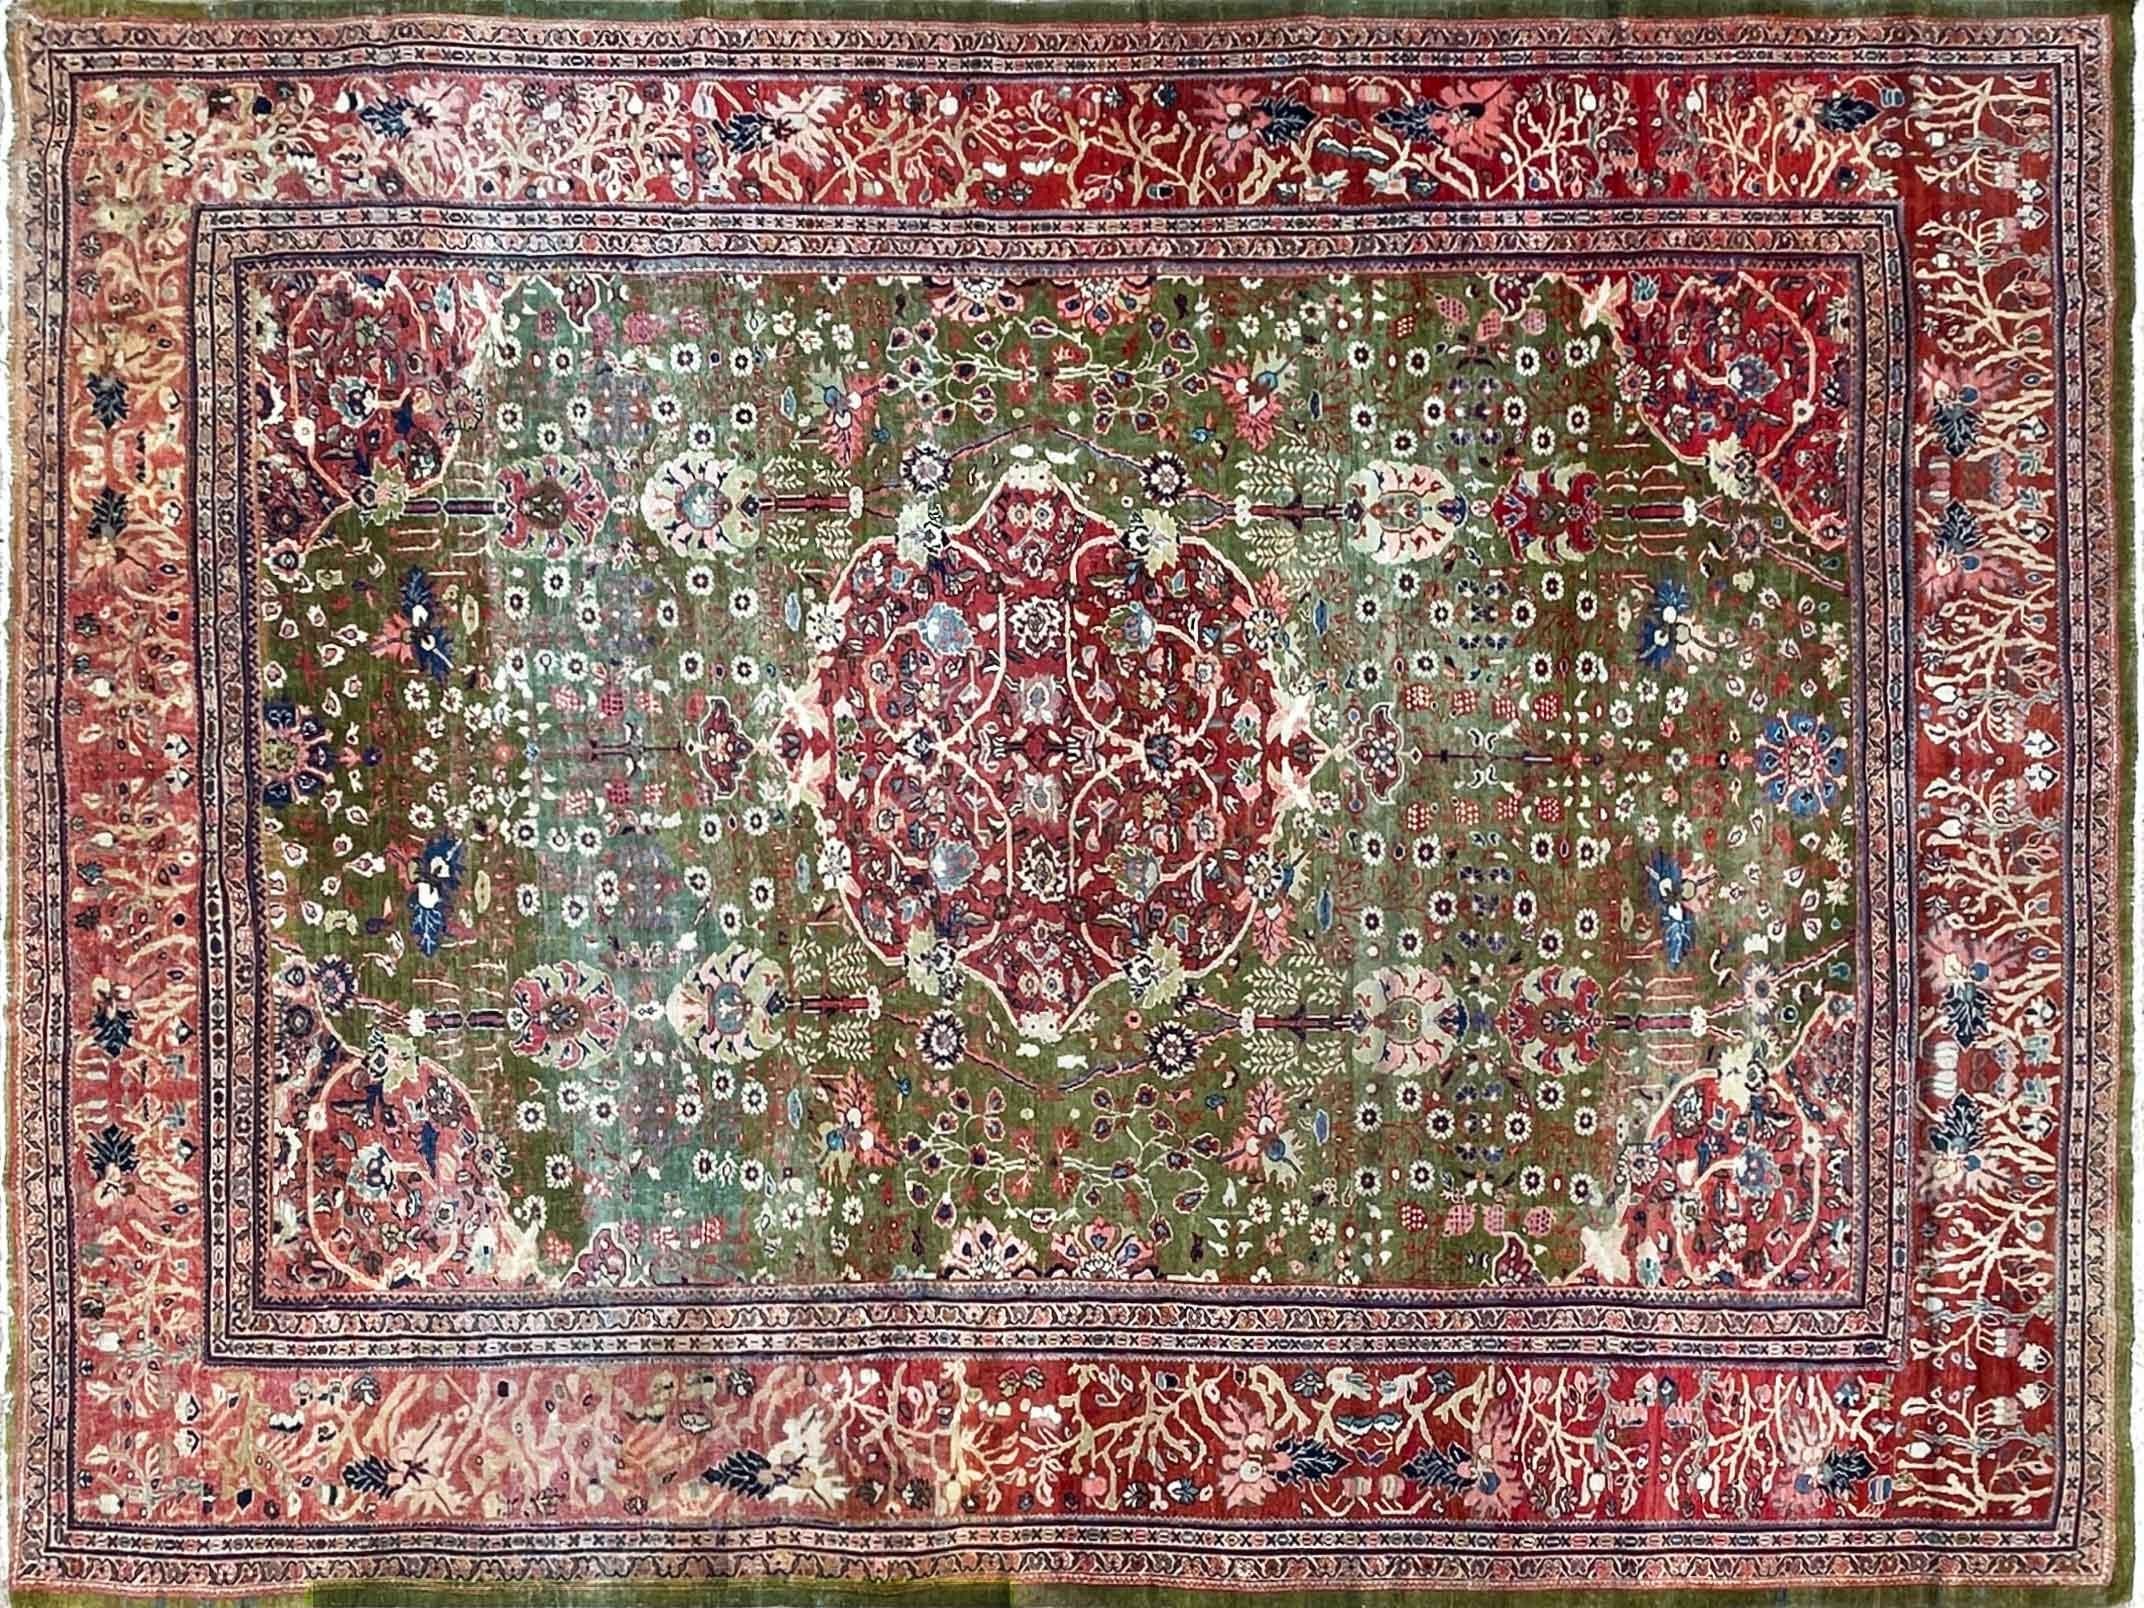 19th Century Antique Persian Sultanabad carpet, beneath The Ocean For Sale